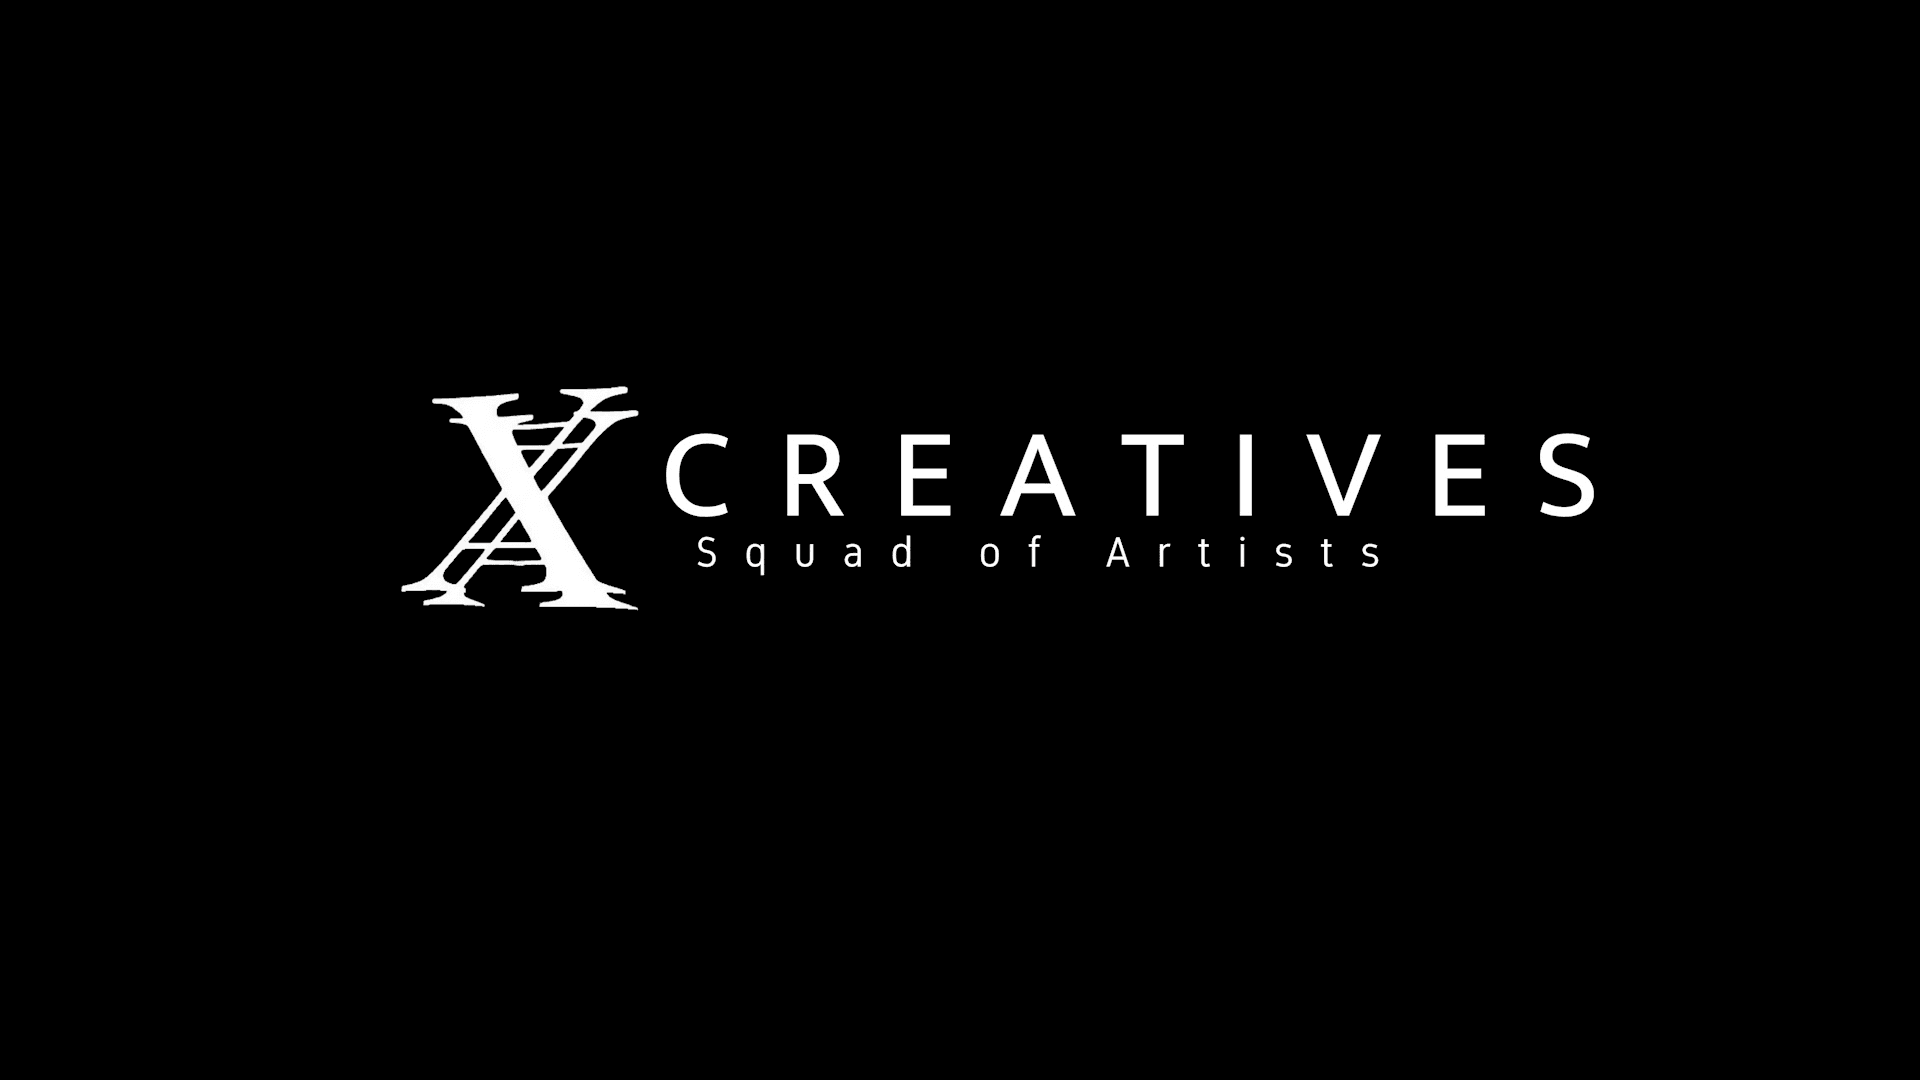 XCreatives-TeamOfArtists banner